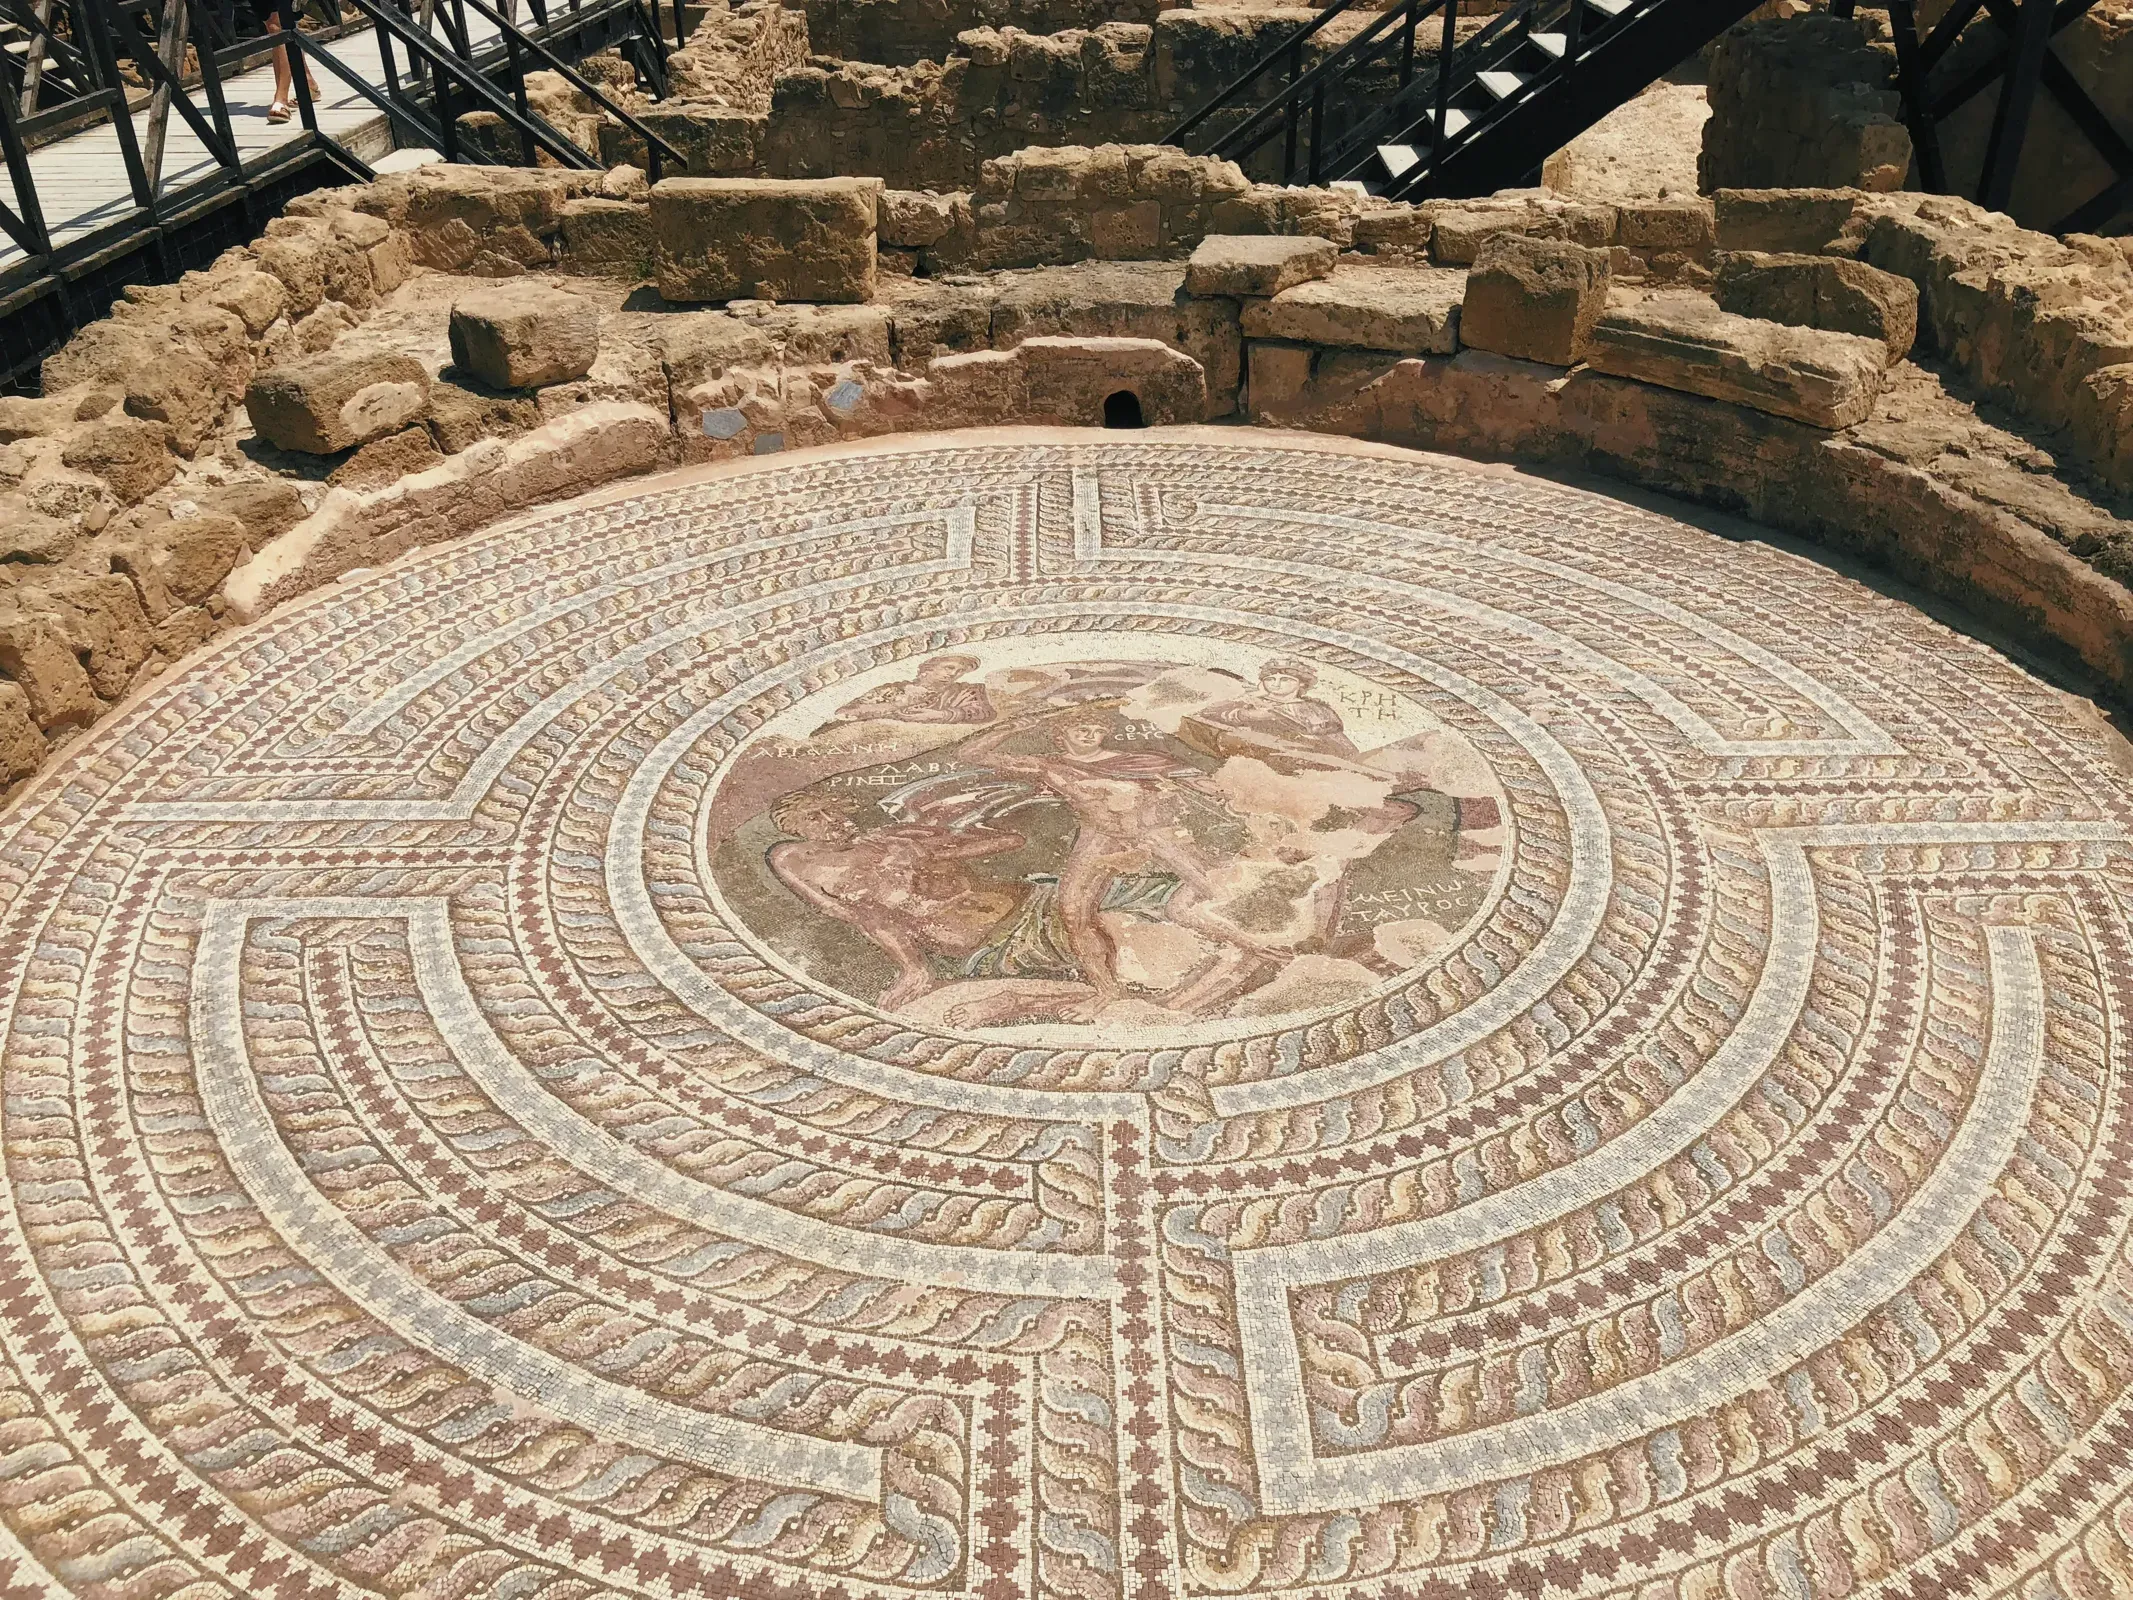 Intricate mosaic art piece in Nea Paphos